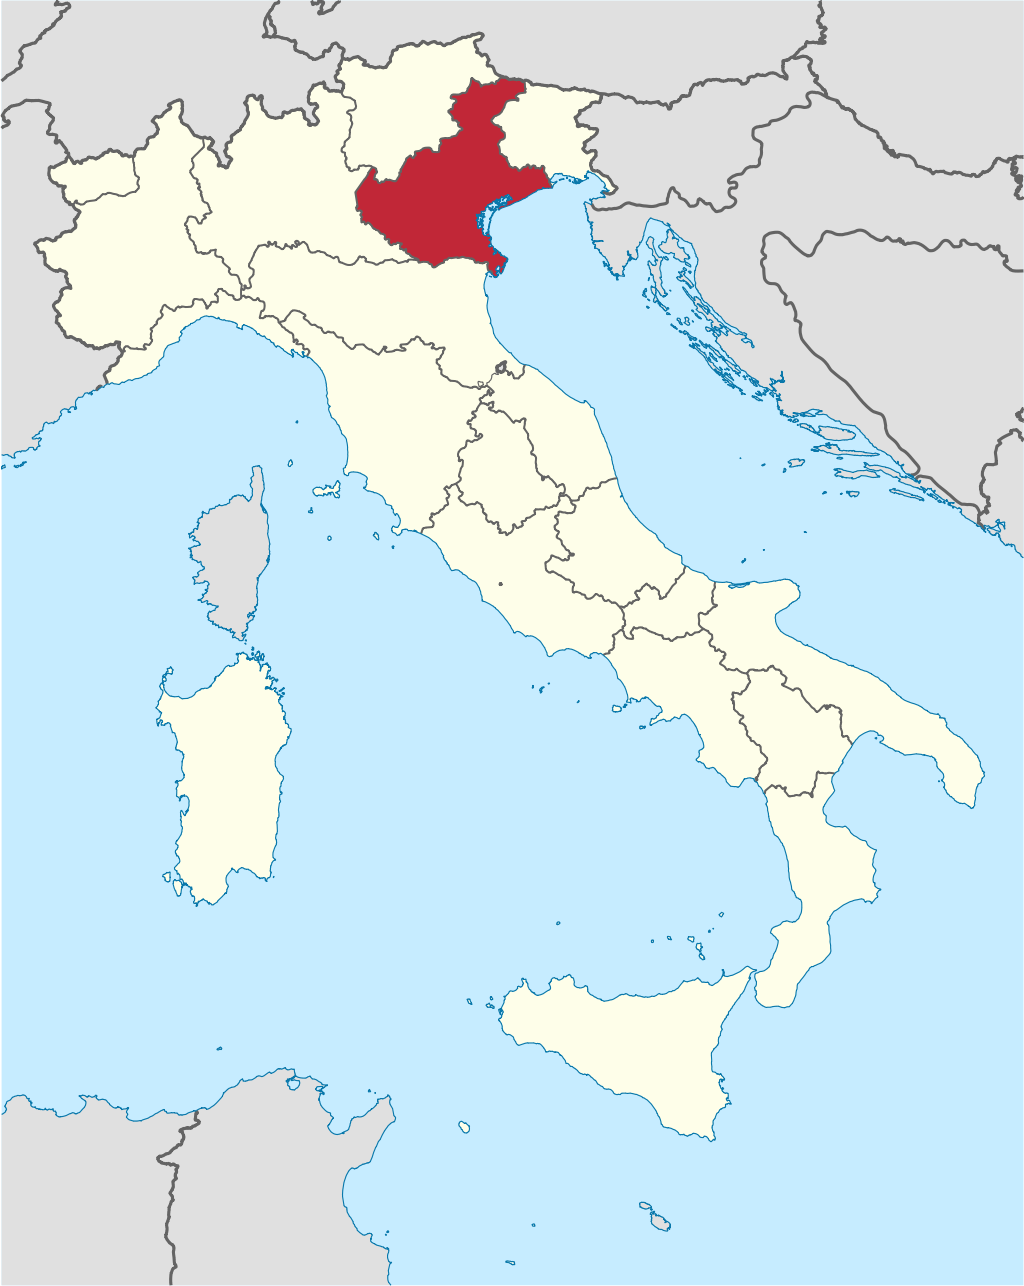 Spa Hotel Urbex locatie in of rond de regio Veneto (Padua), Italy